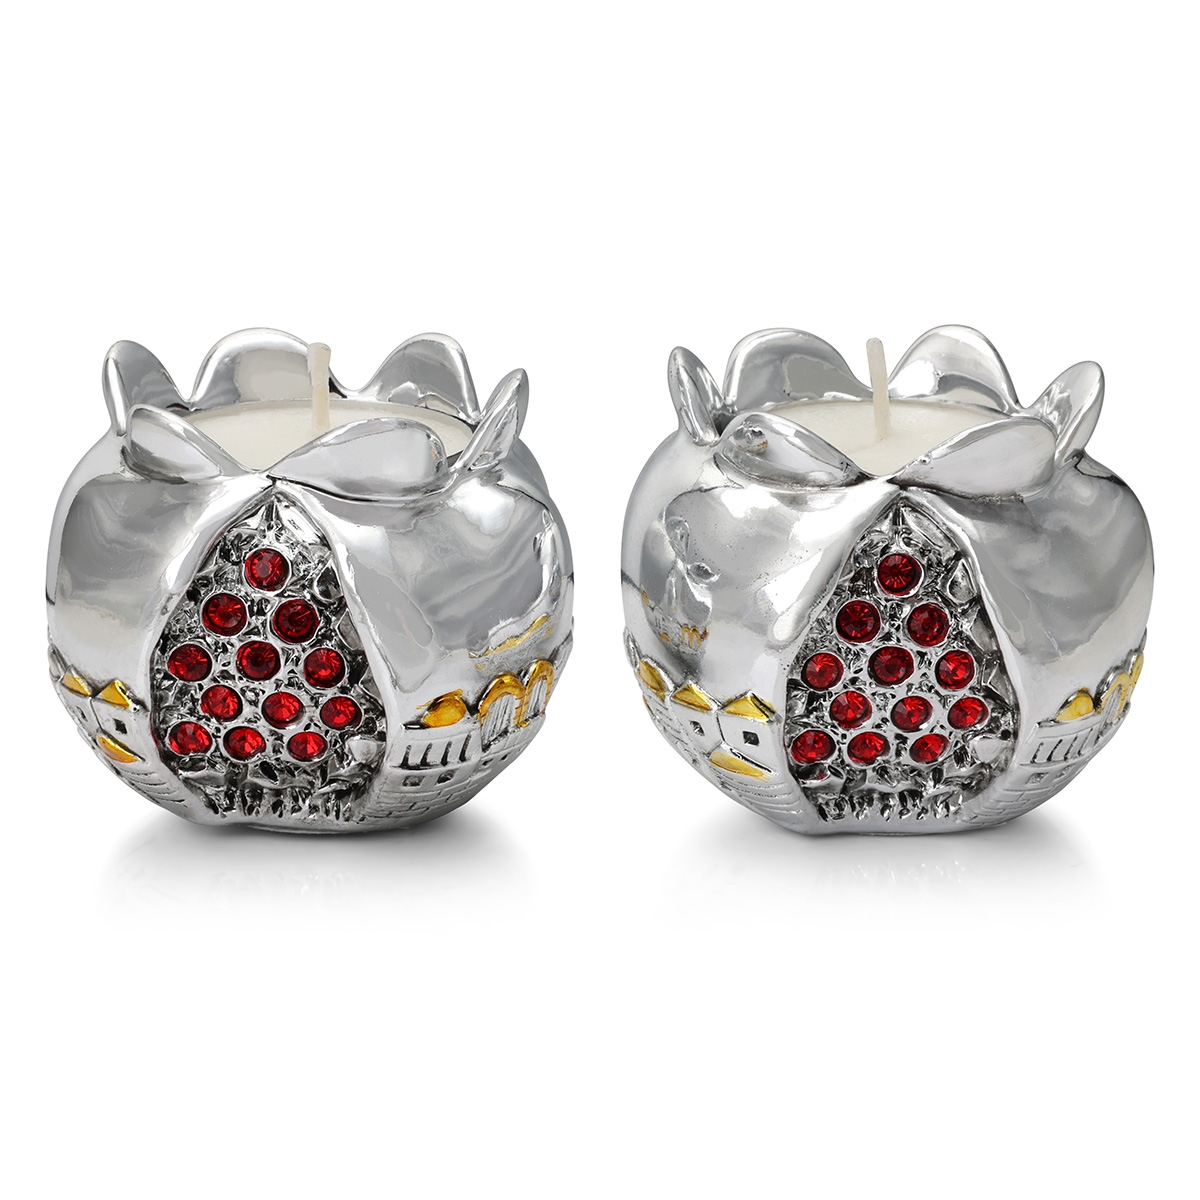 Silver Pomegranate with Jewels and Golden Highlights Candlesticks - Jerusalem - 1